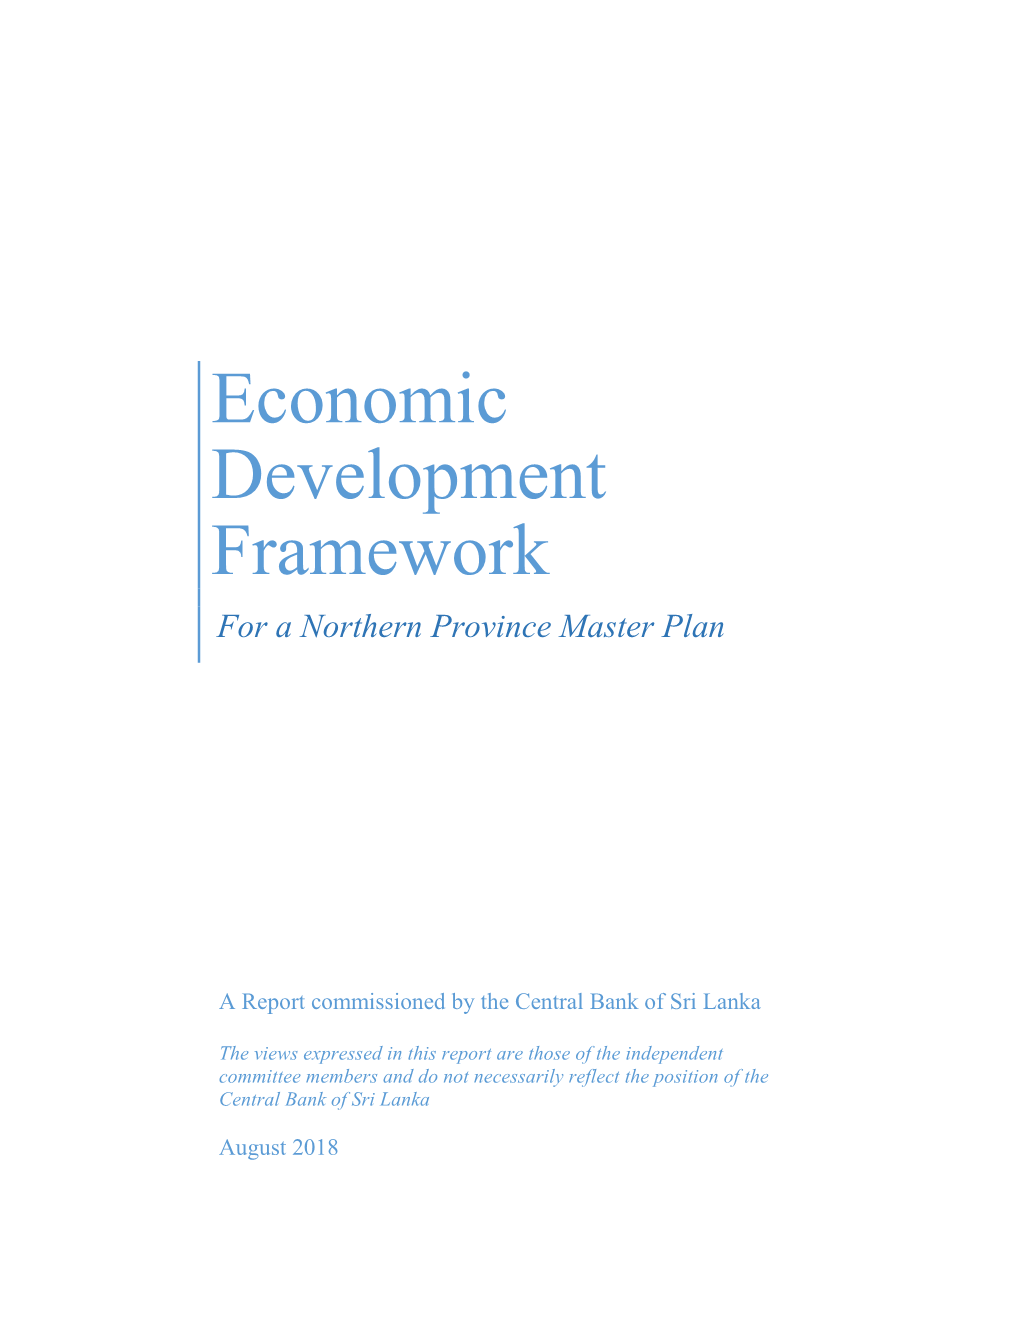 Economic Development Framework for a Northern Province Master Plan